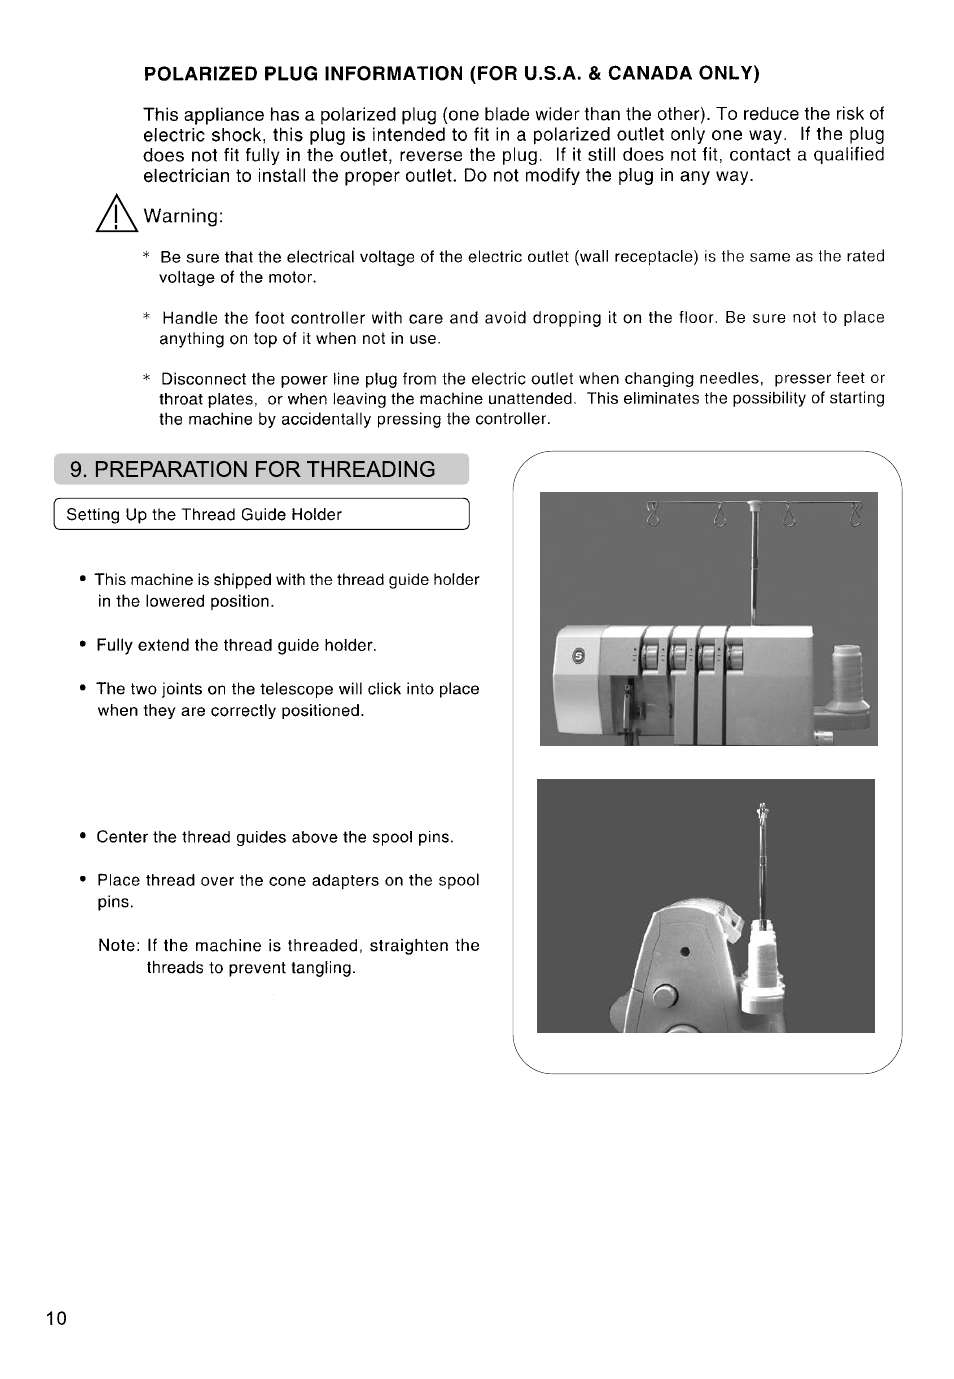 SINGER 5554 Heavy Duty Combo User Manual | Page 78 / 121